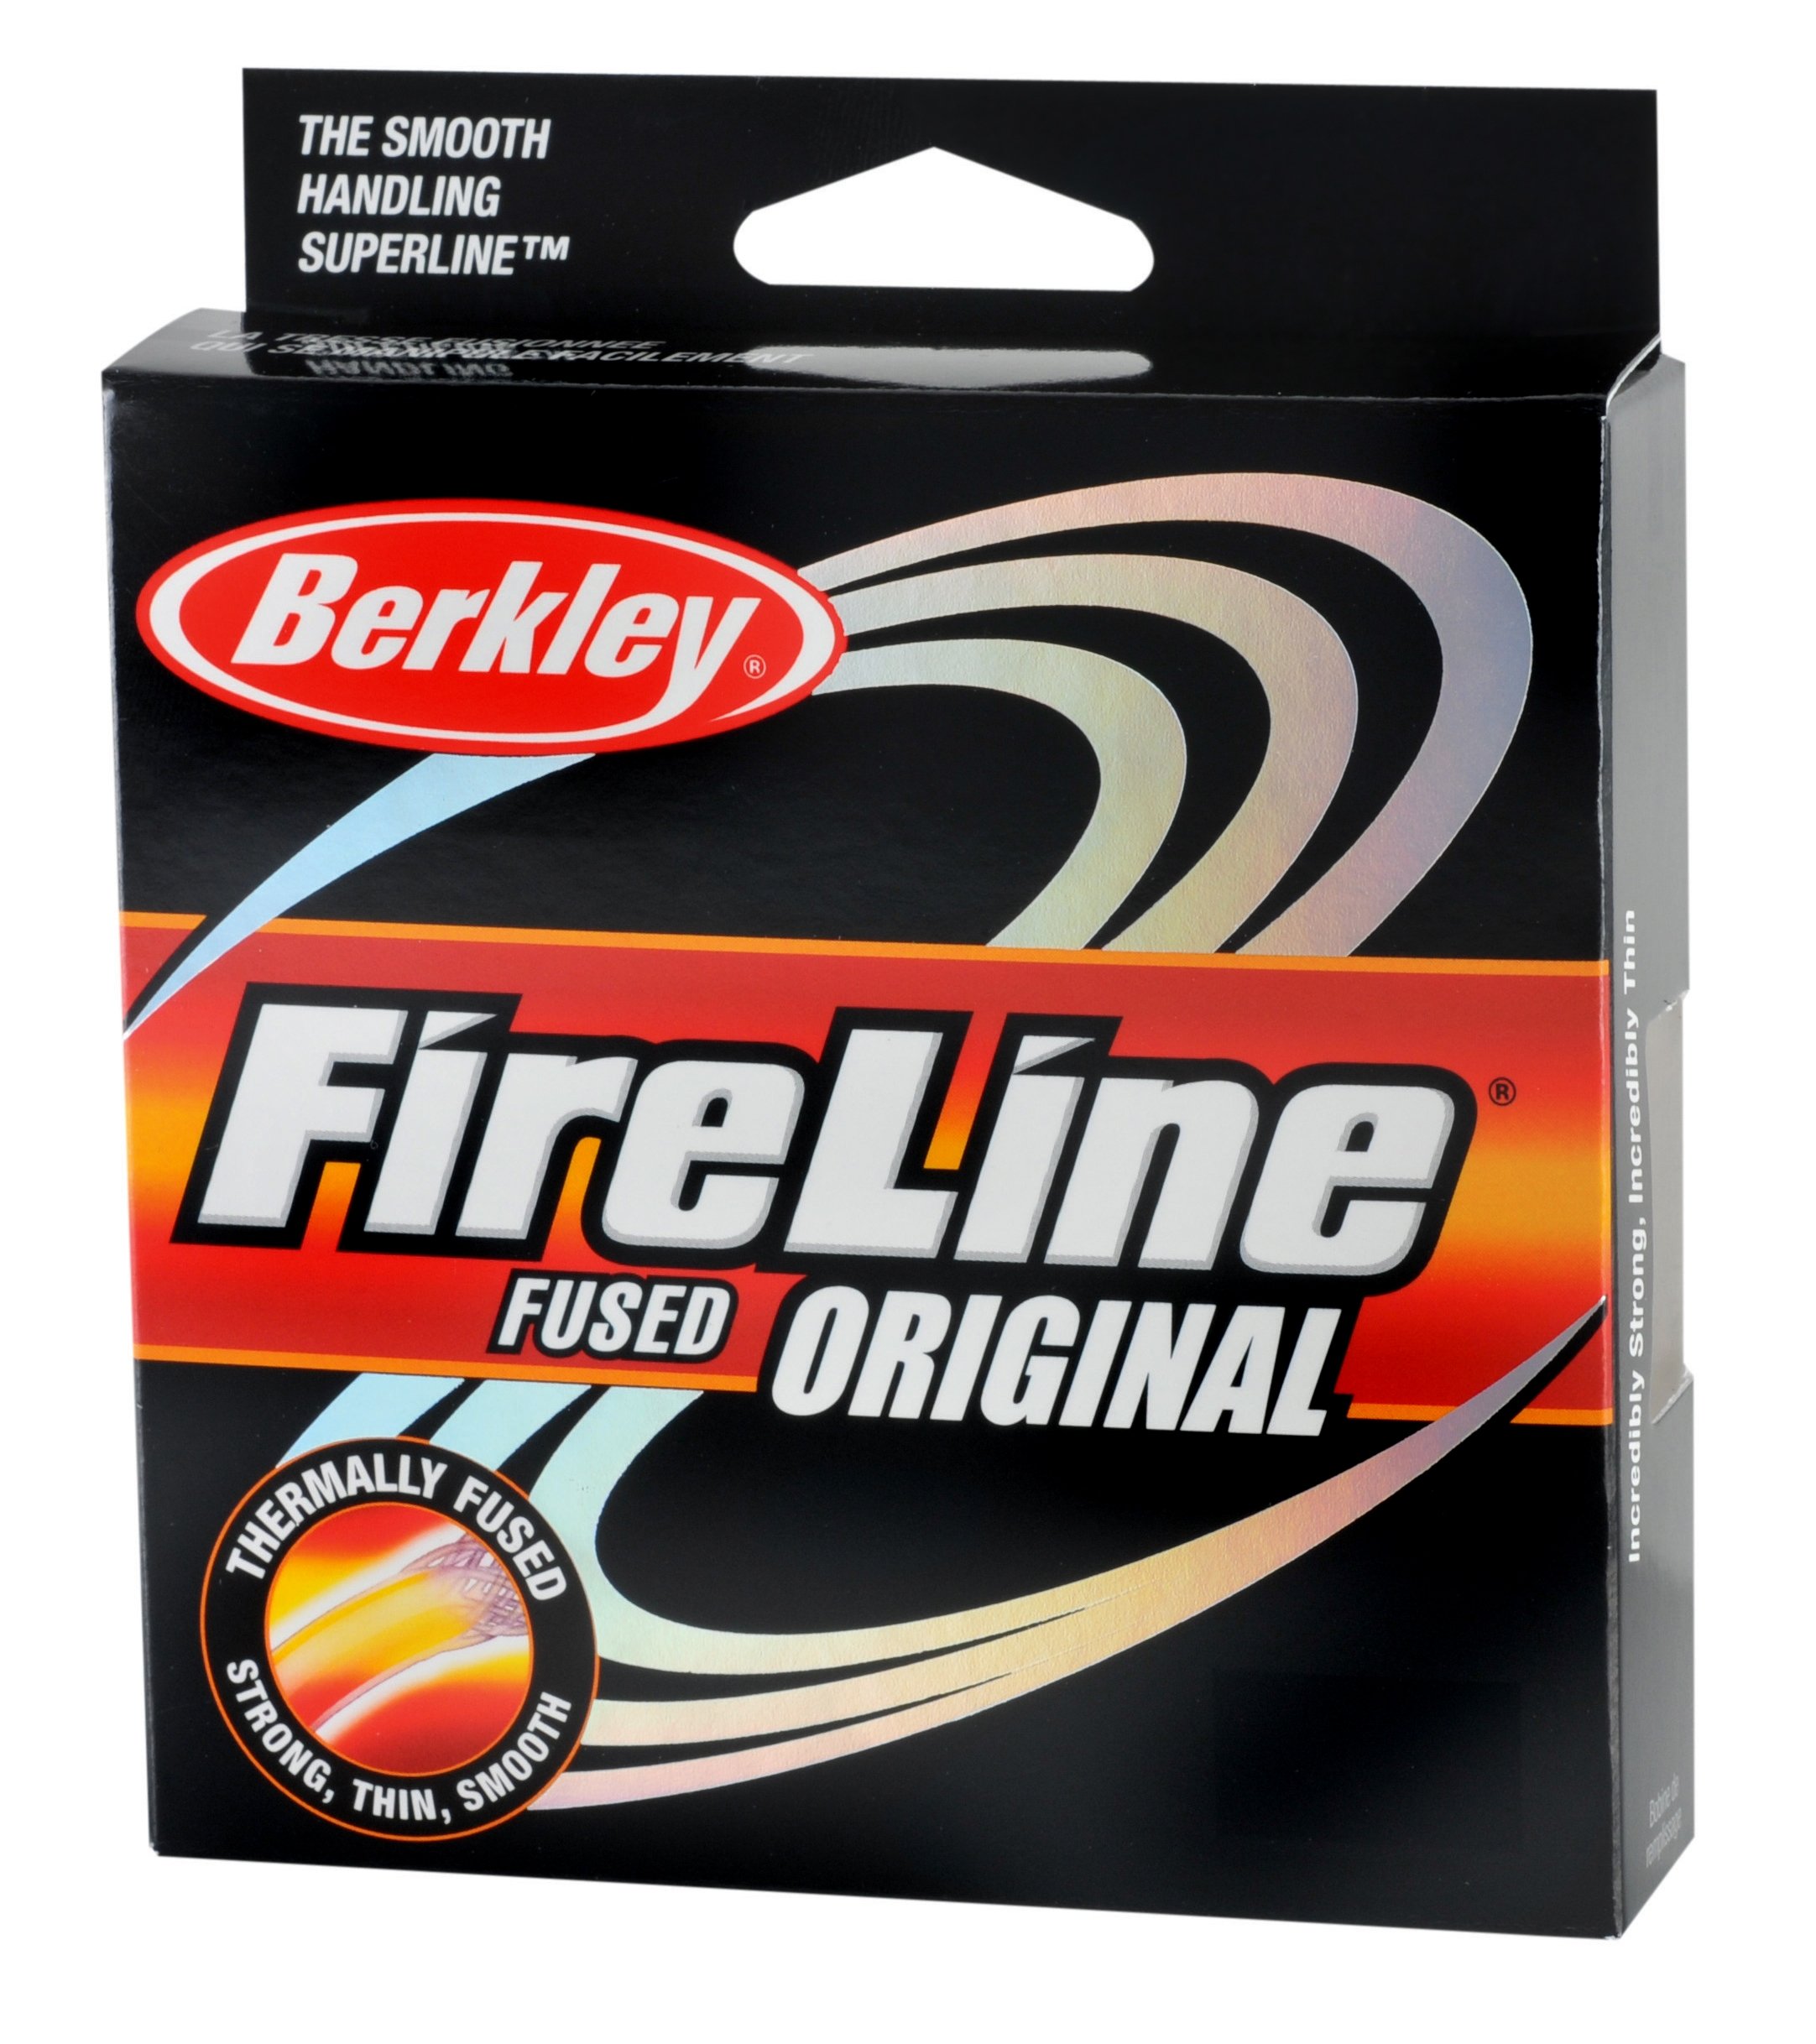 Berkley Fireline Fused Original Fishing Line, Smoke 